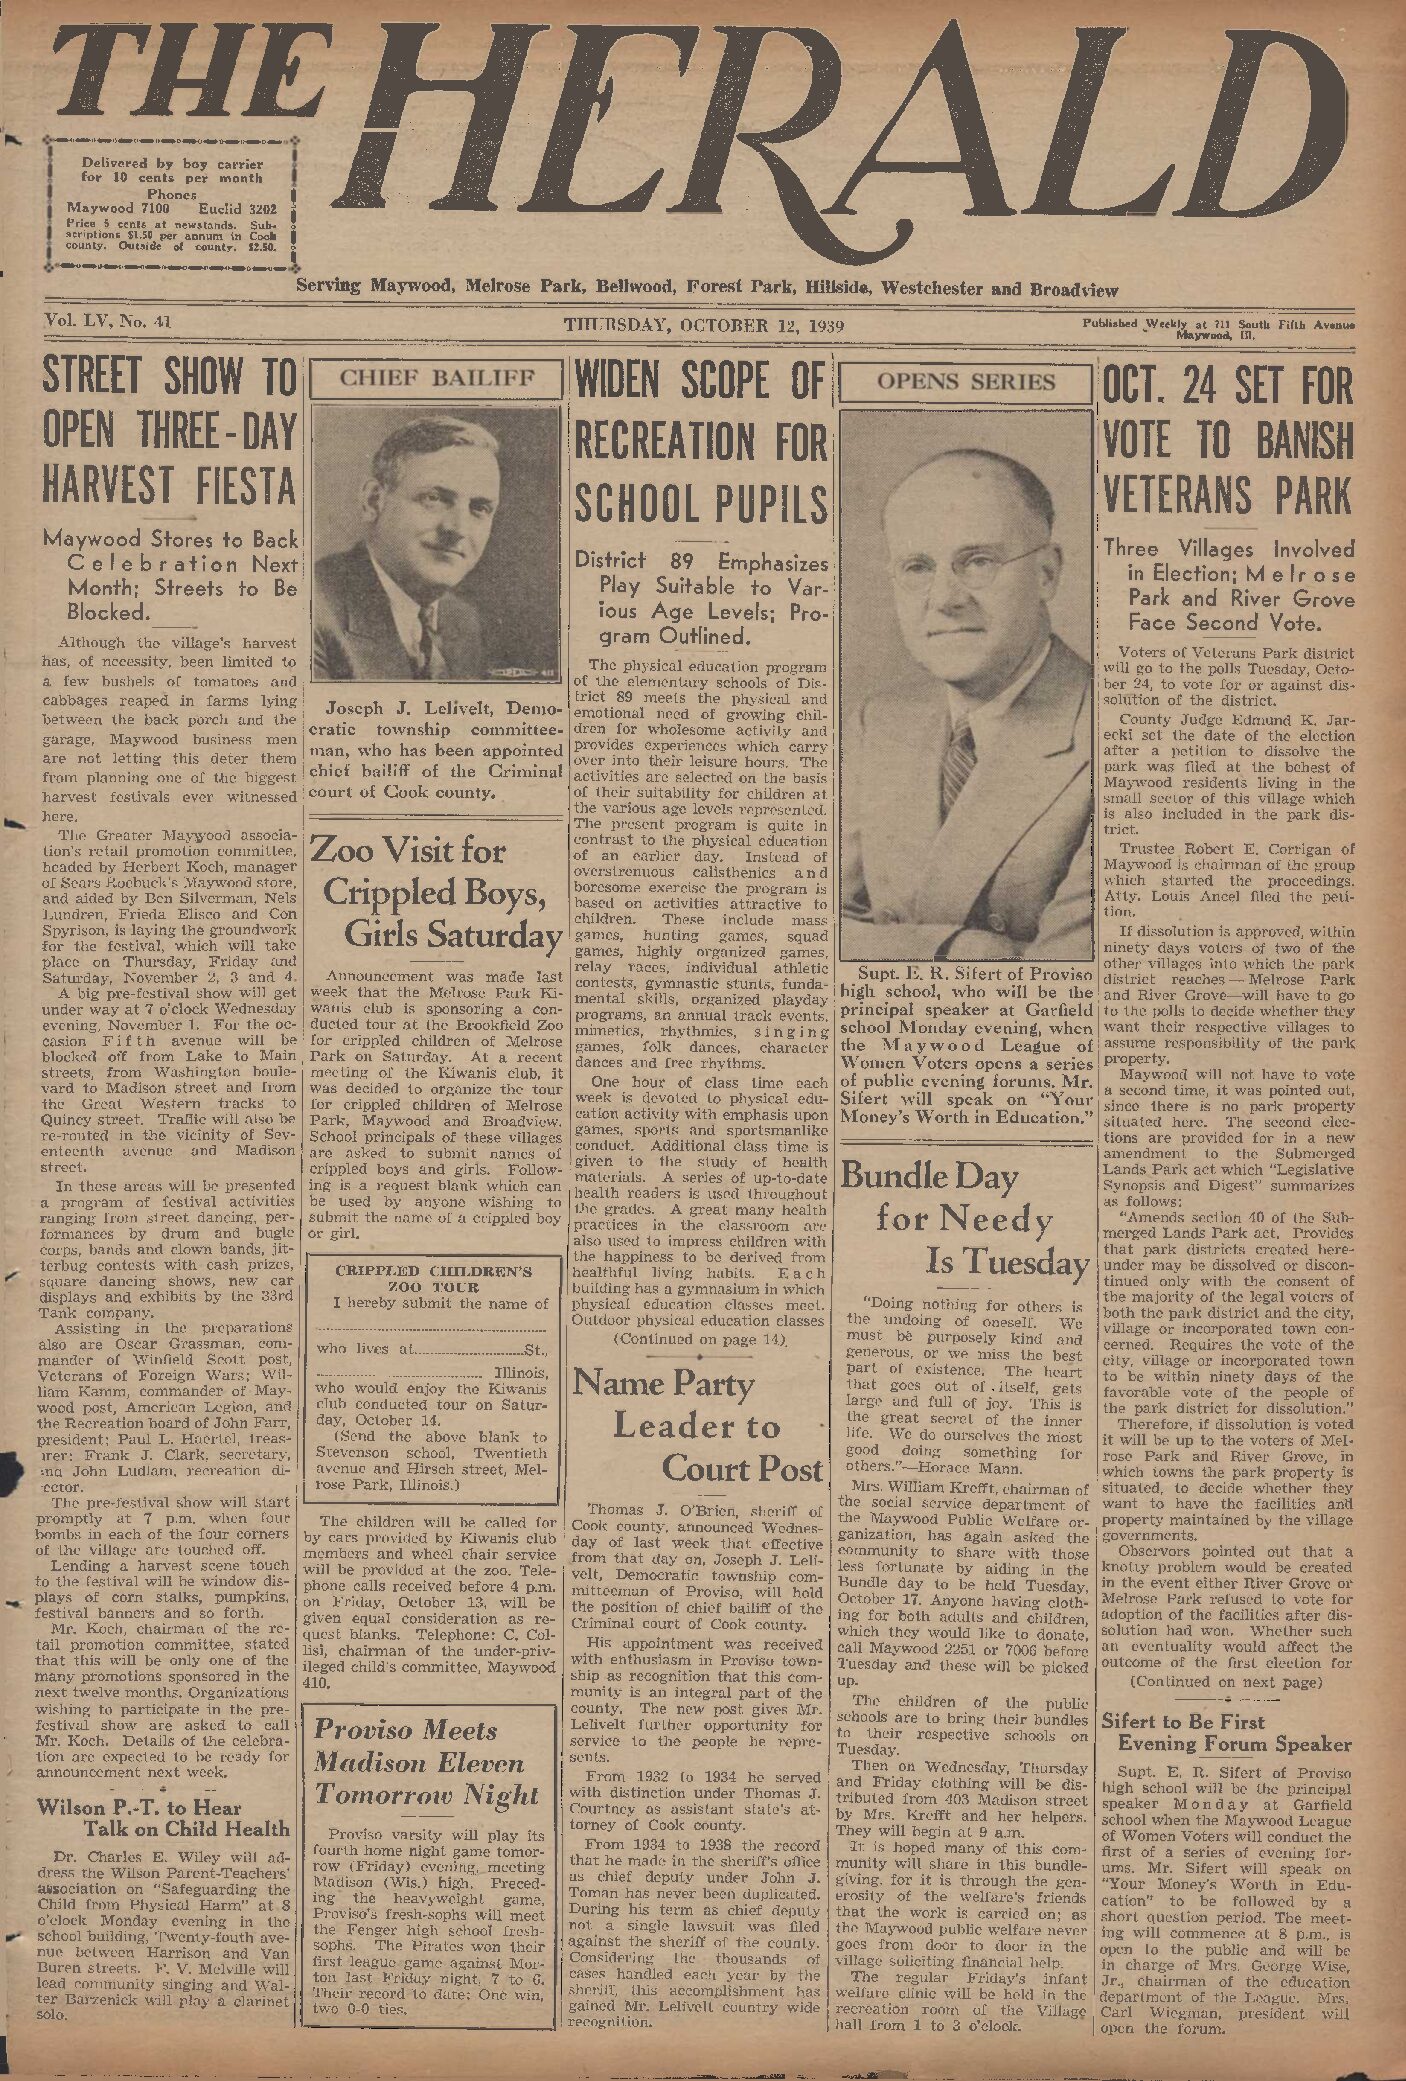 The Herald – 19391012